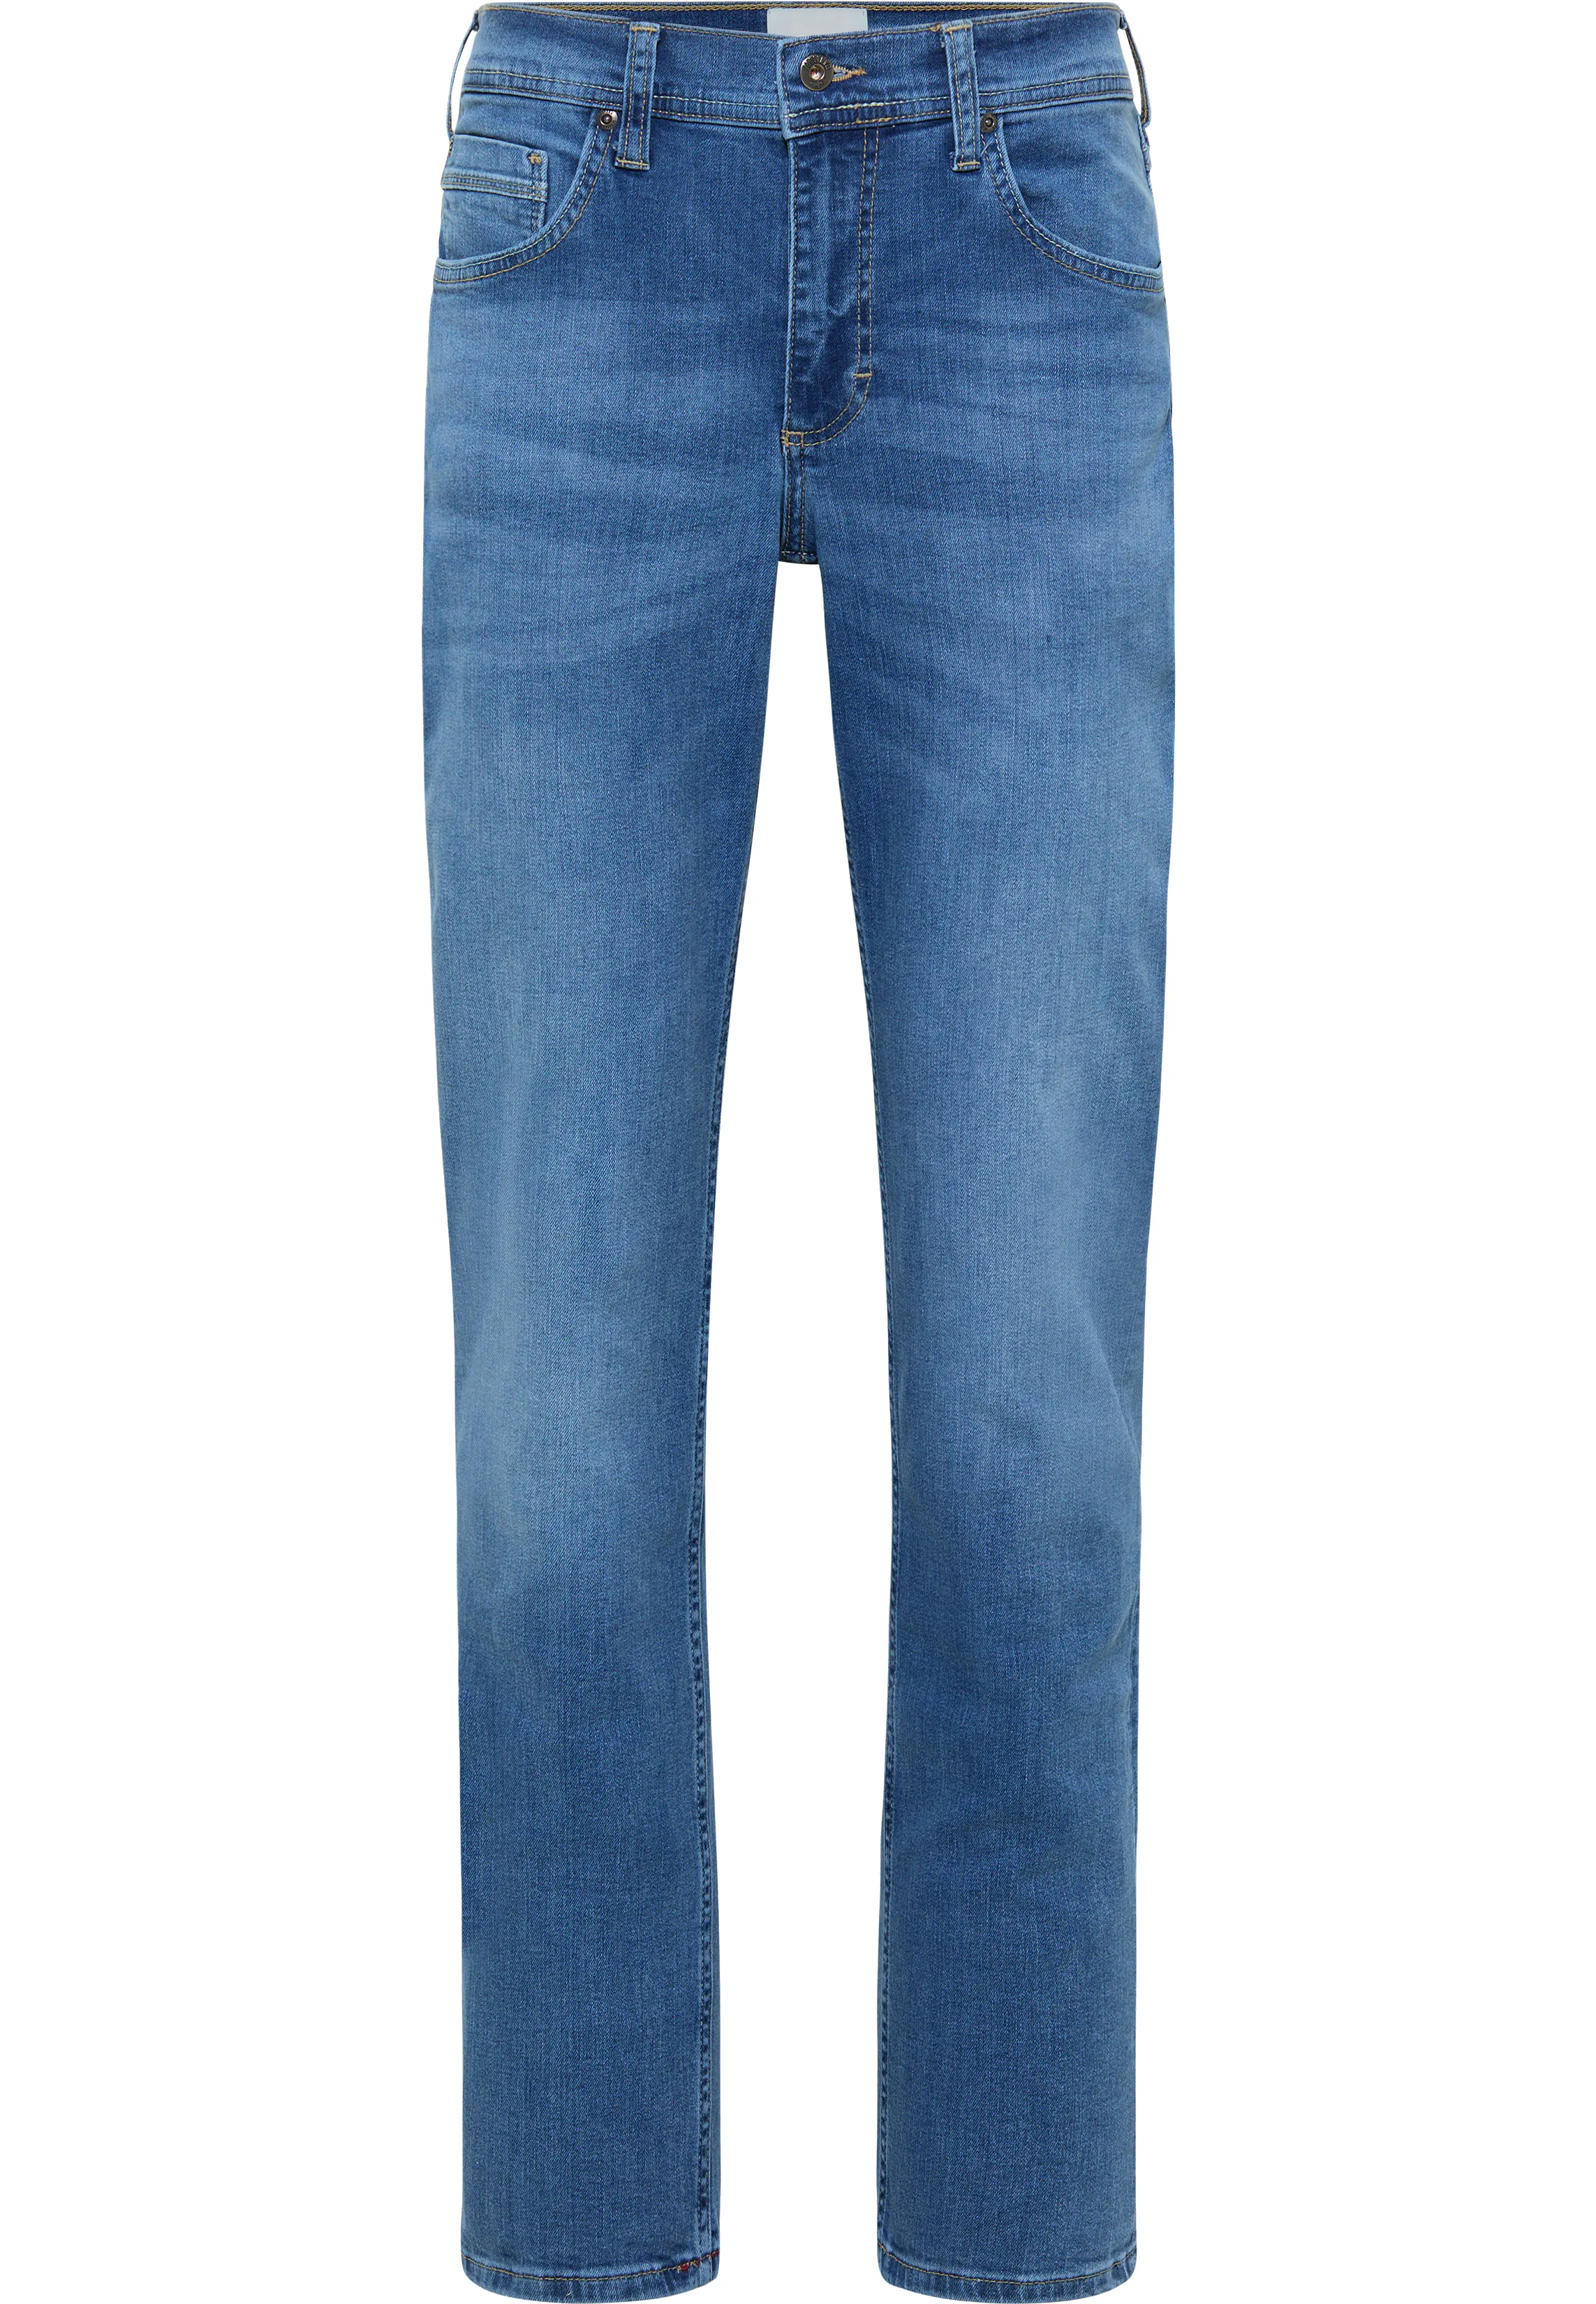 Mustang Washington Jeans Slim Fit light blue extra lang günstig online kaufen